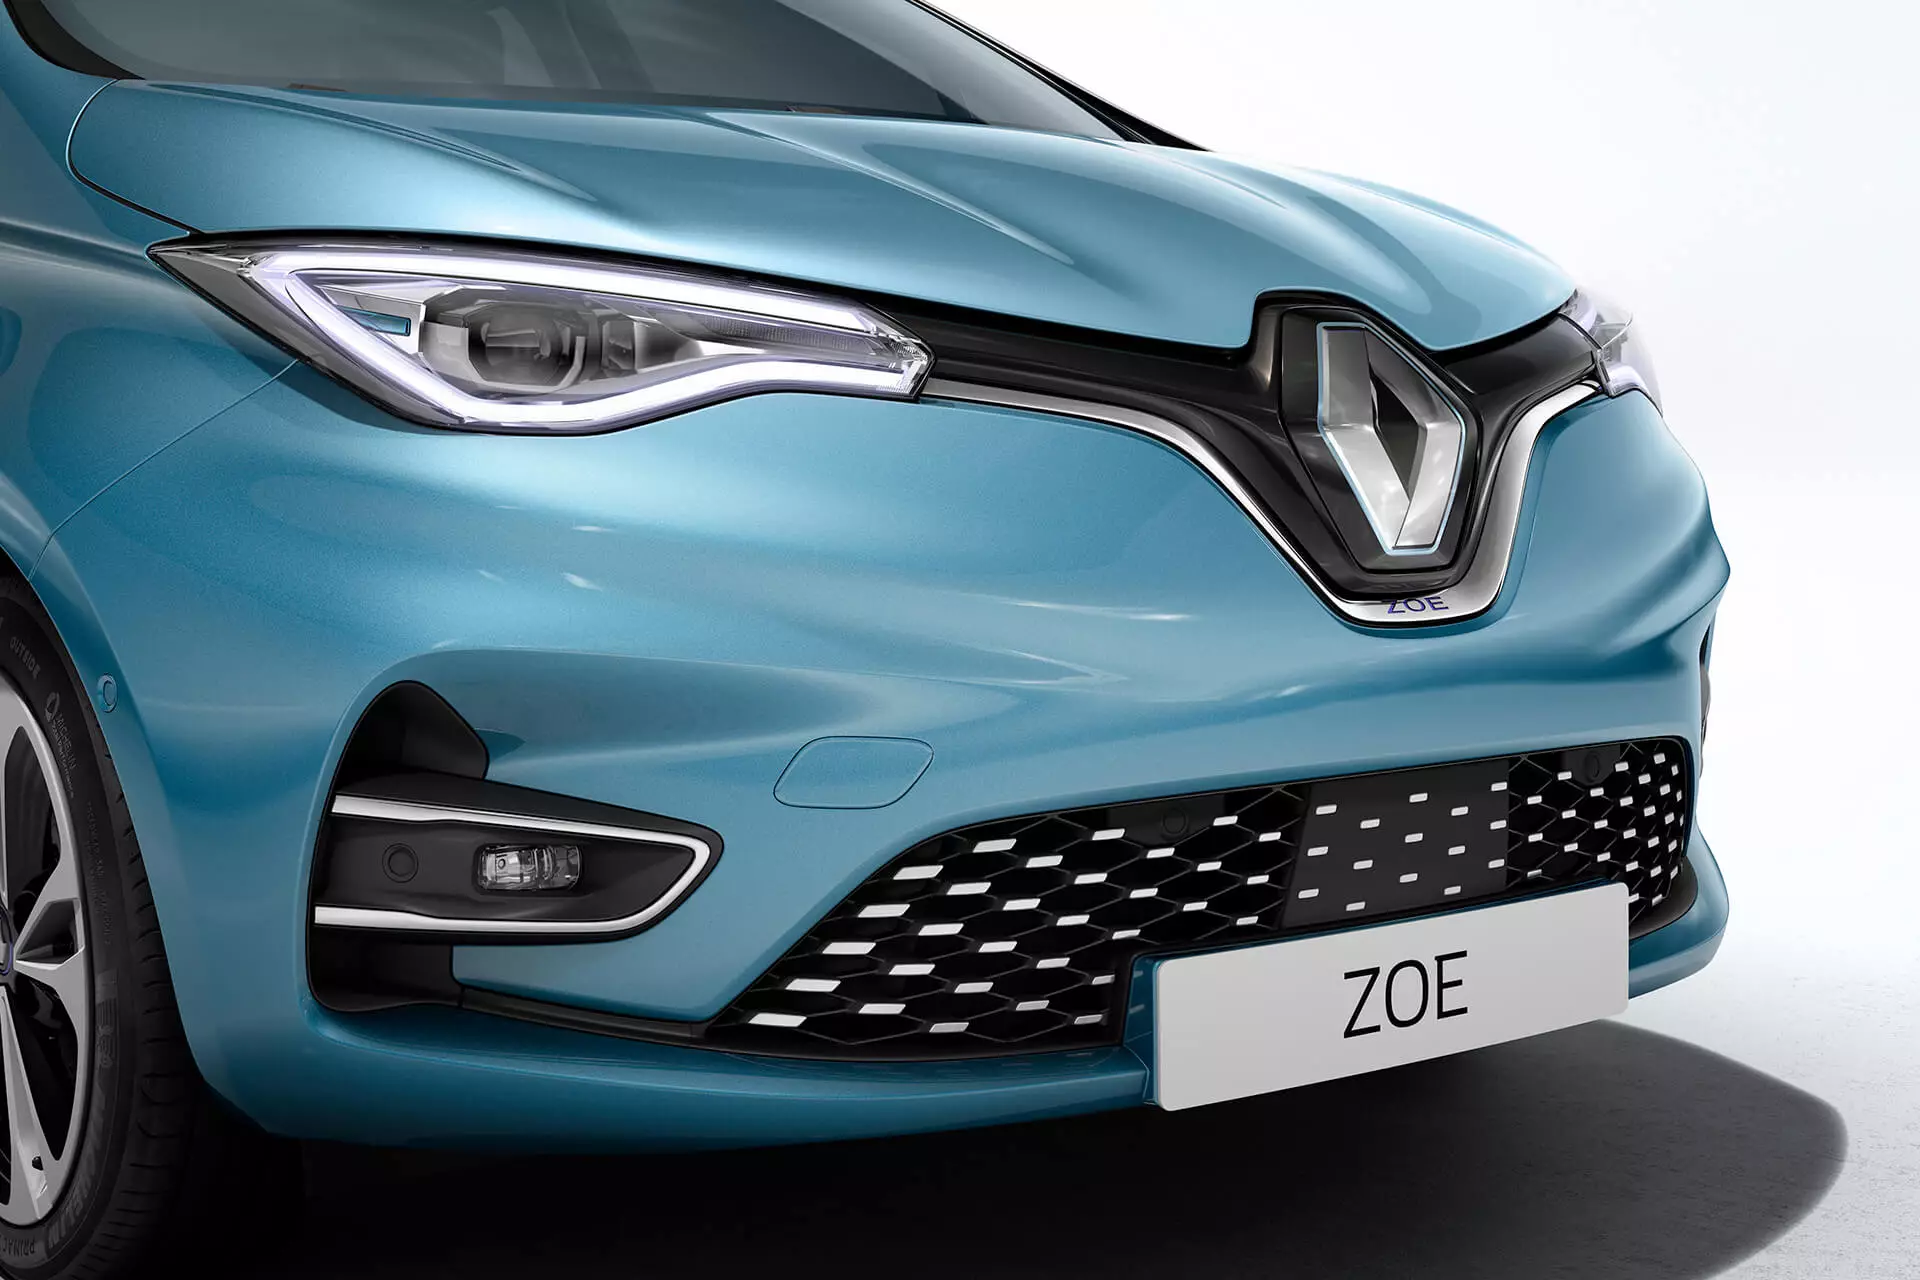 Renault Zoé 2020